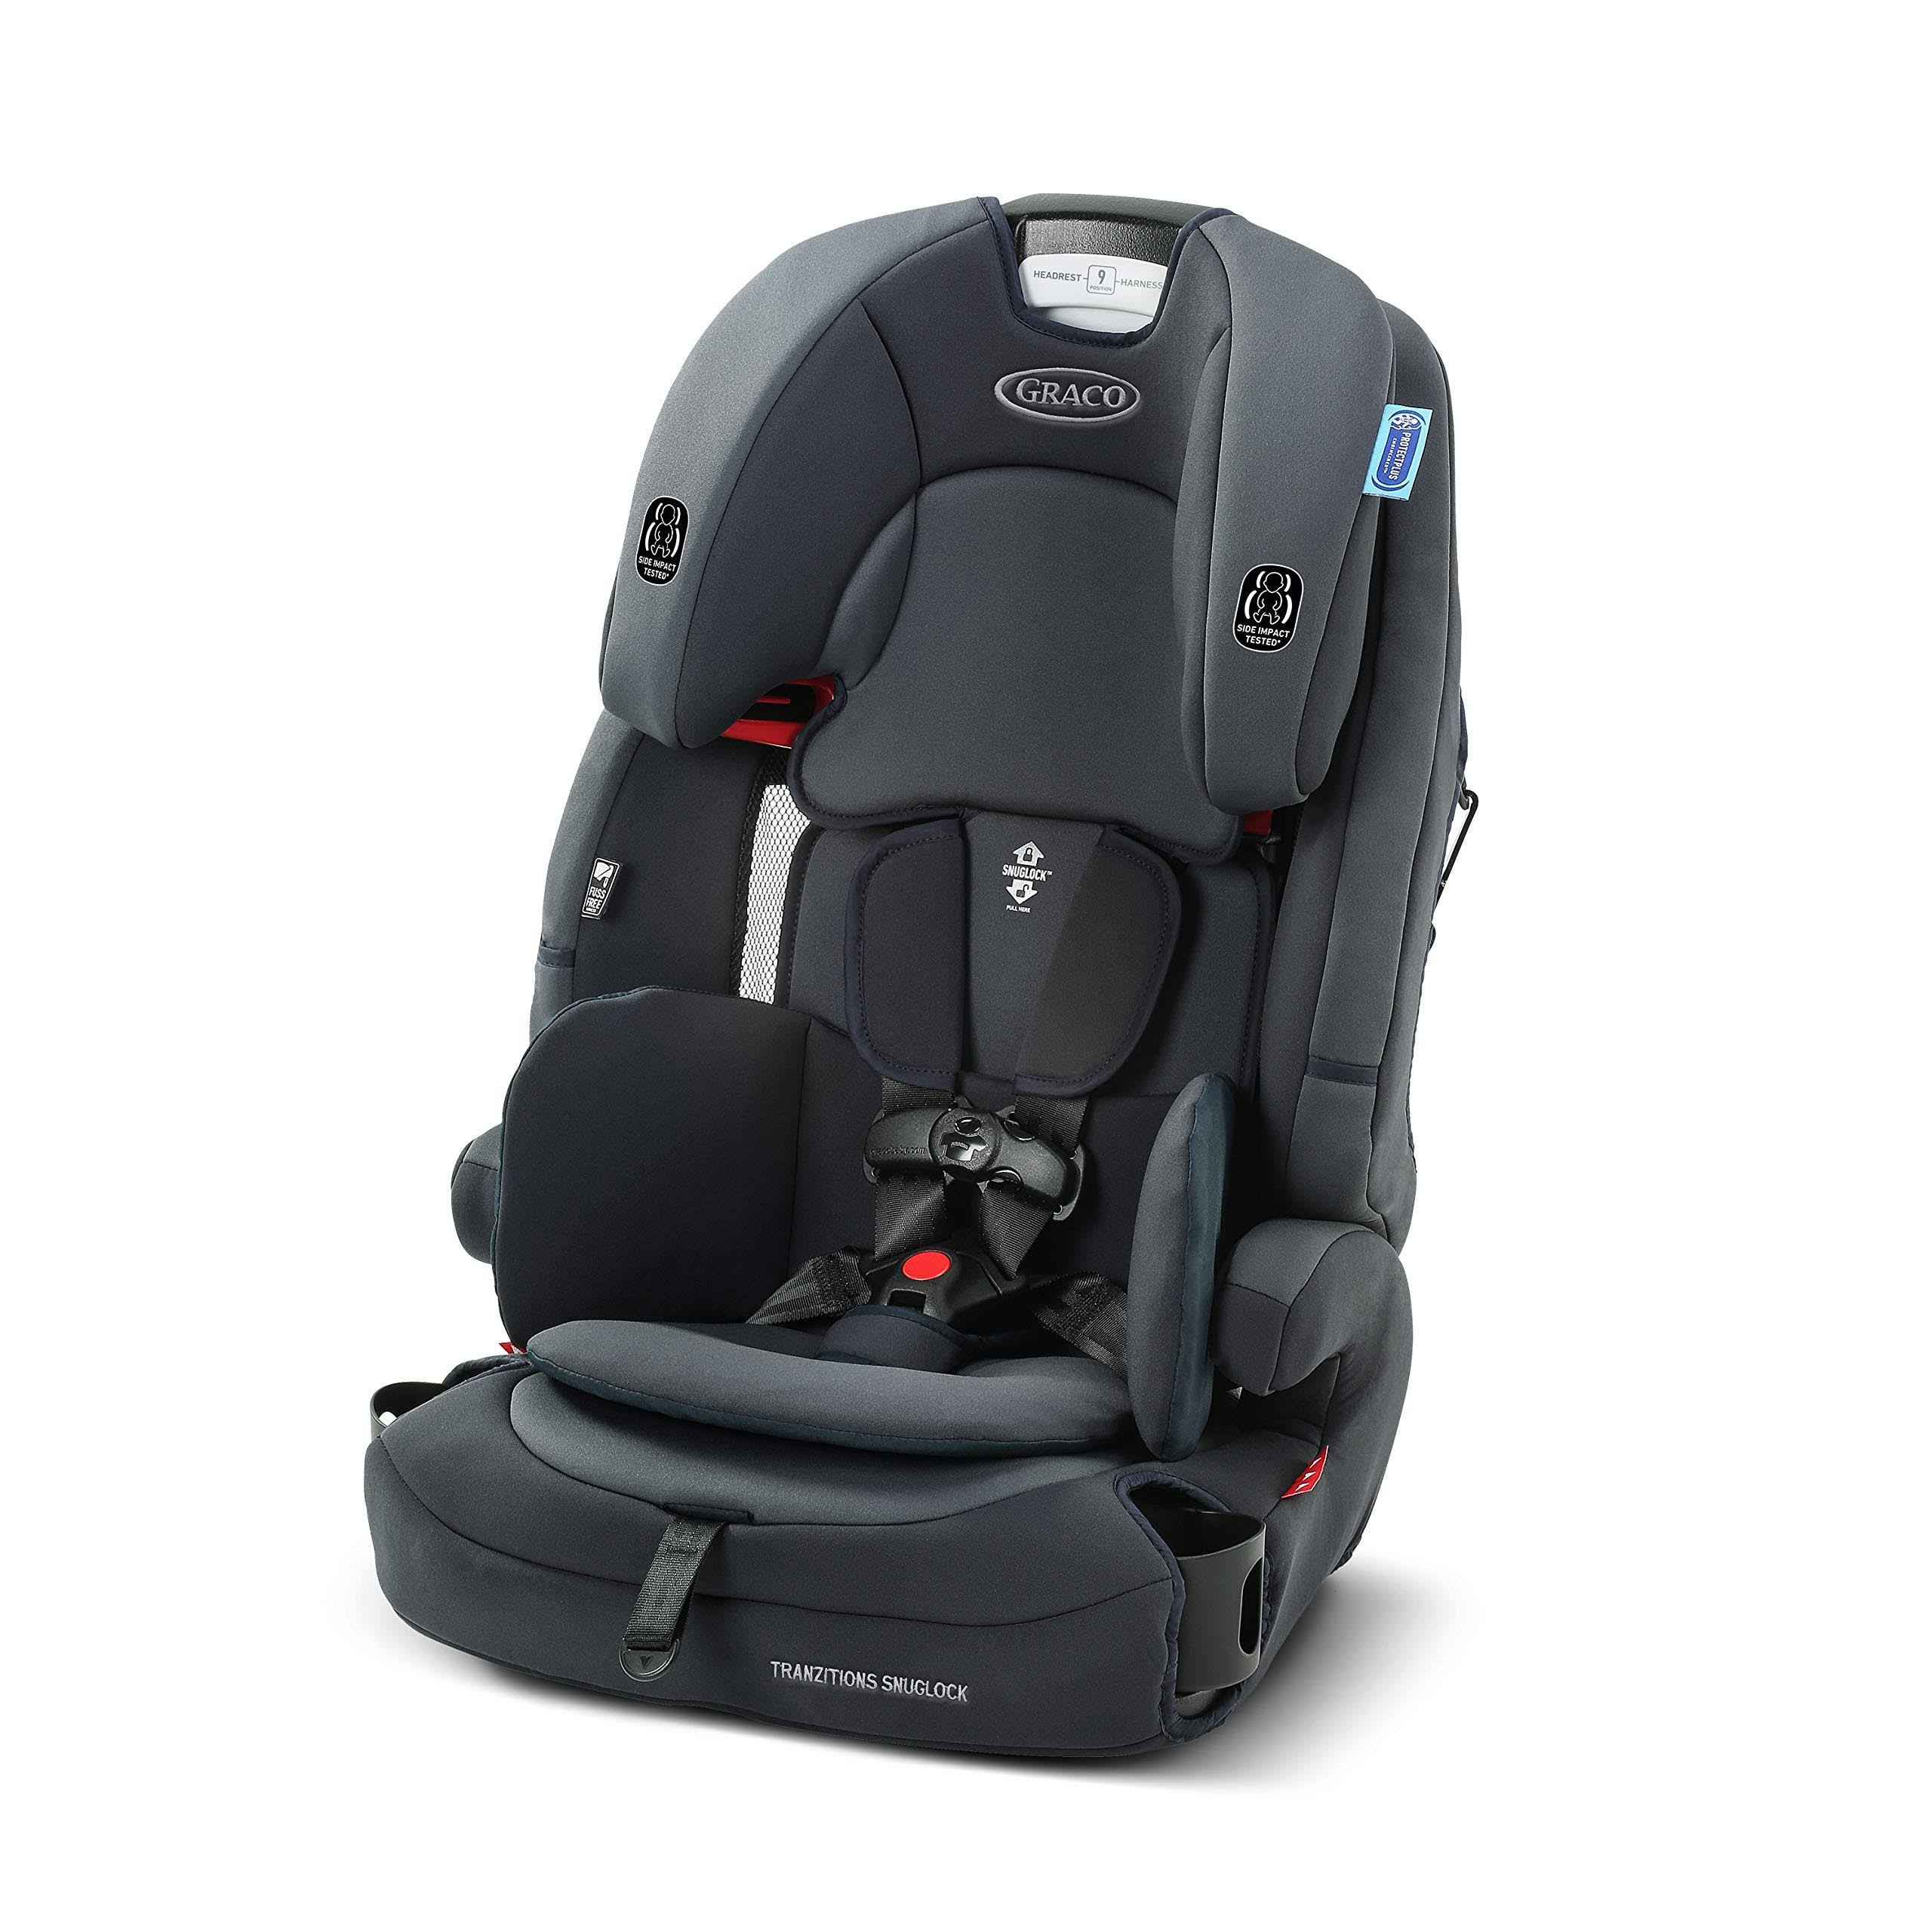 Baby Trend 3 In 1 Car Seat vs. Graco Tranzitions SnugLock 3 in 1: